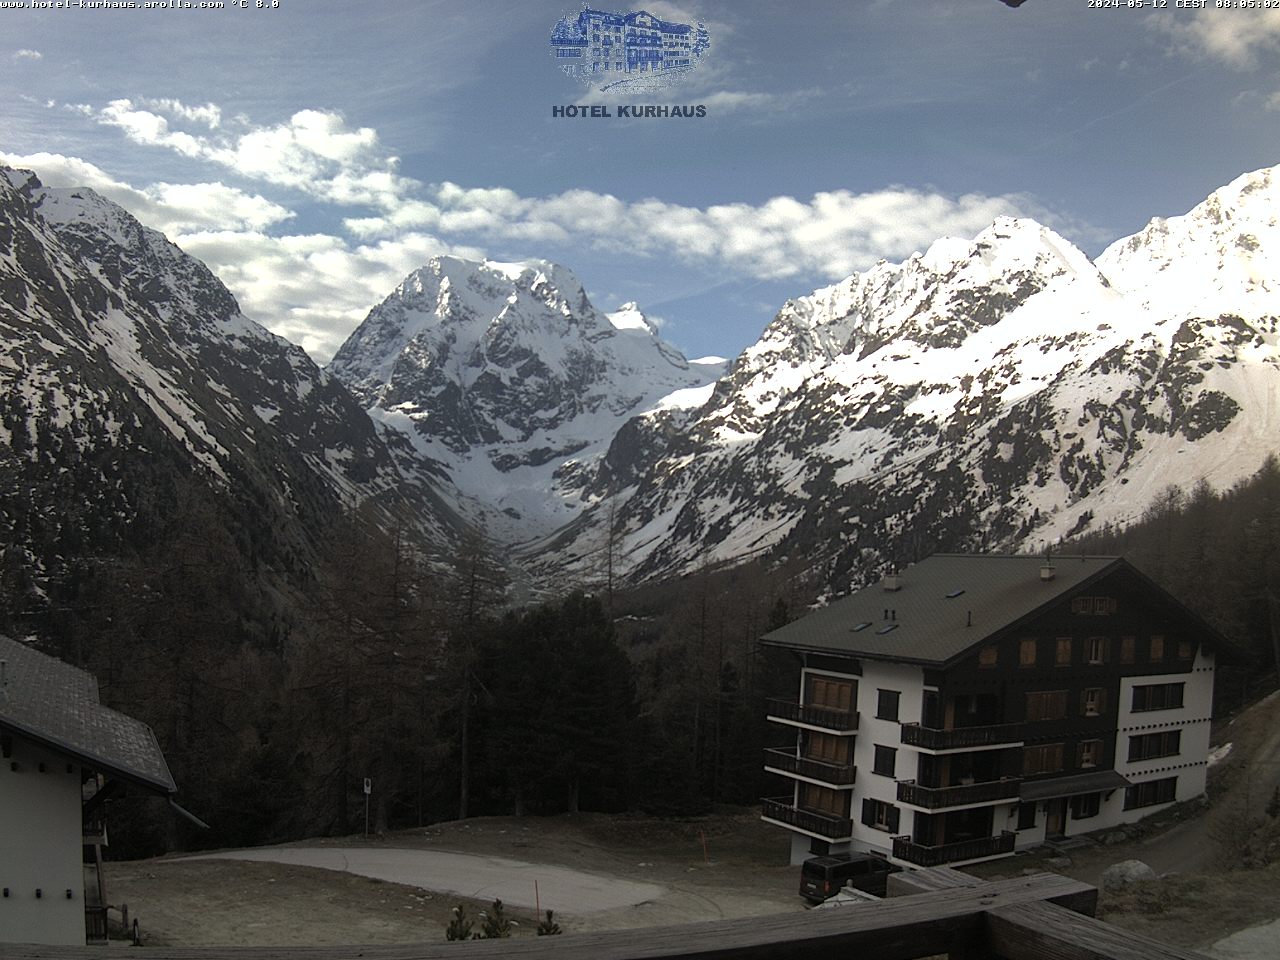 Ski Resort Arolla Switzerland cam 1 Arolla Switzerland - Webcams Abroad live images